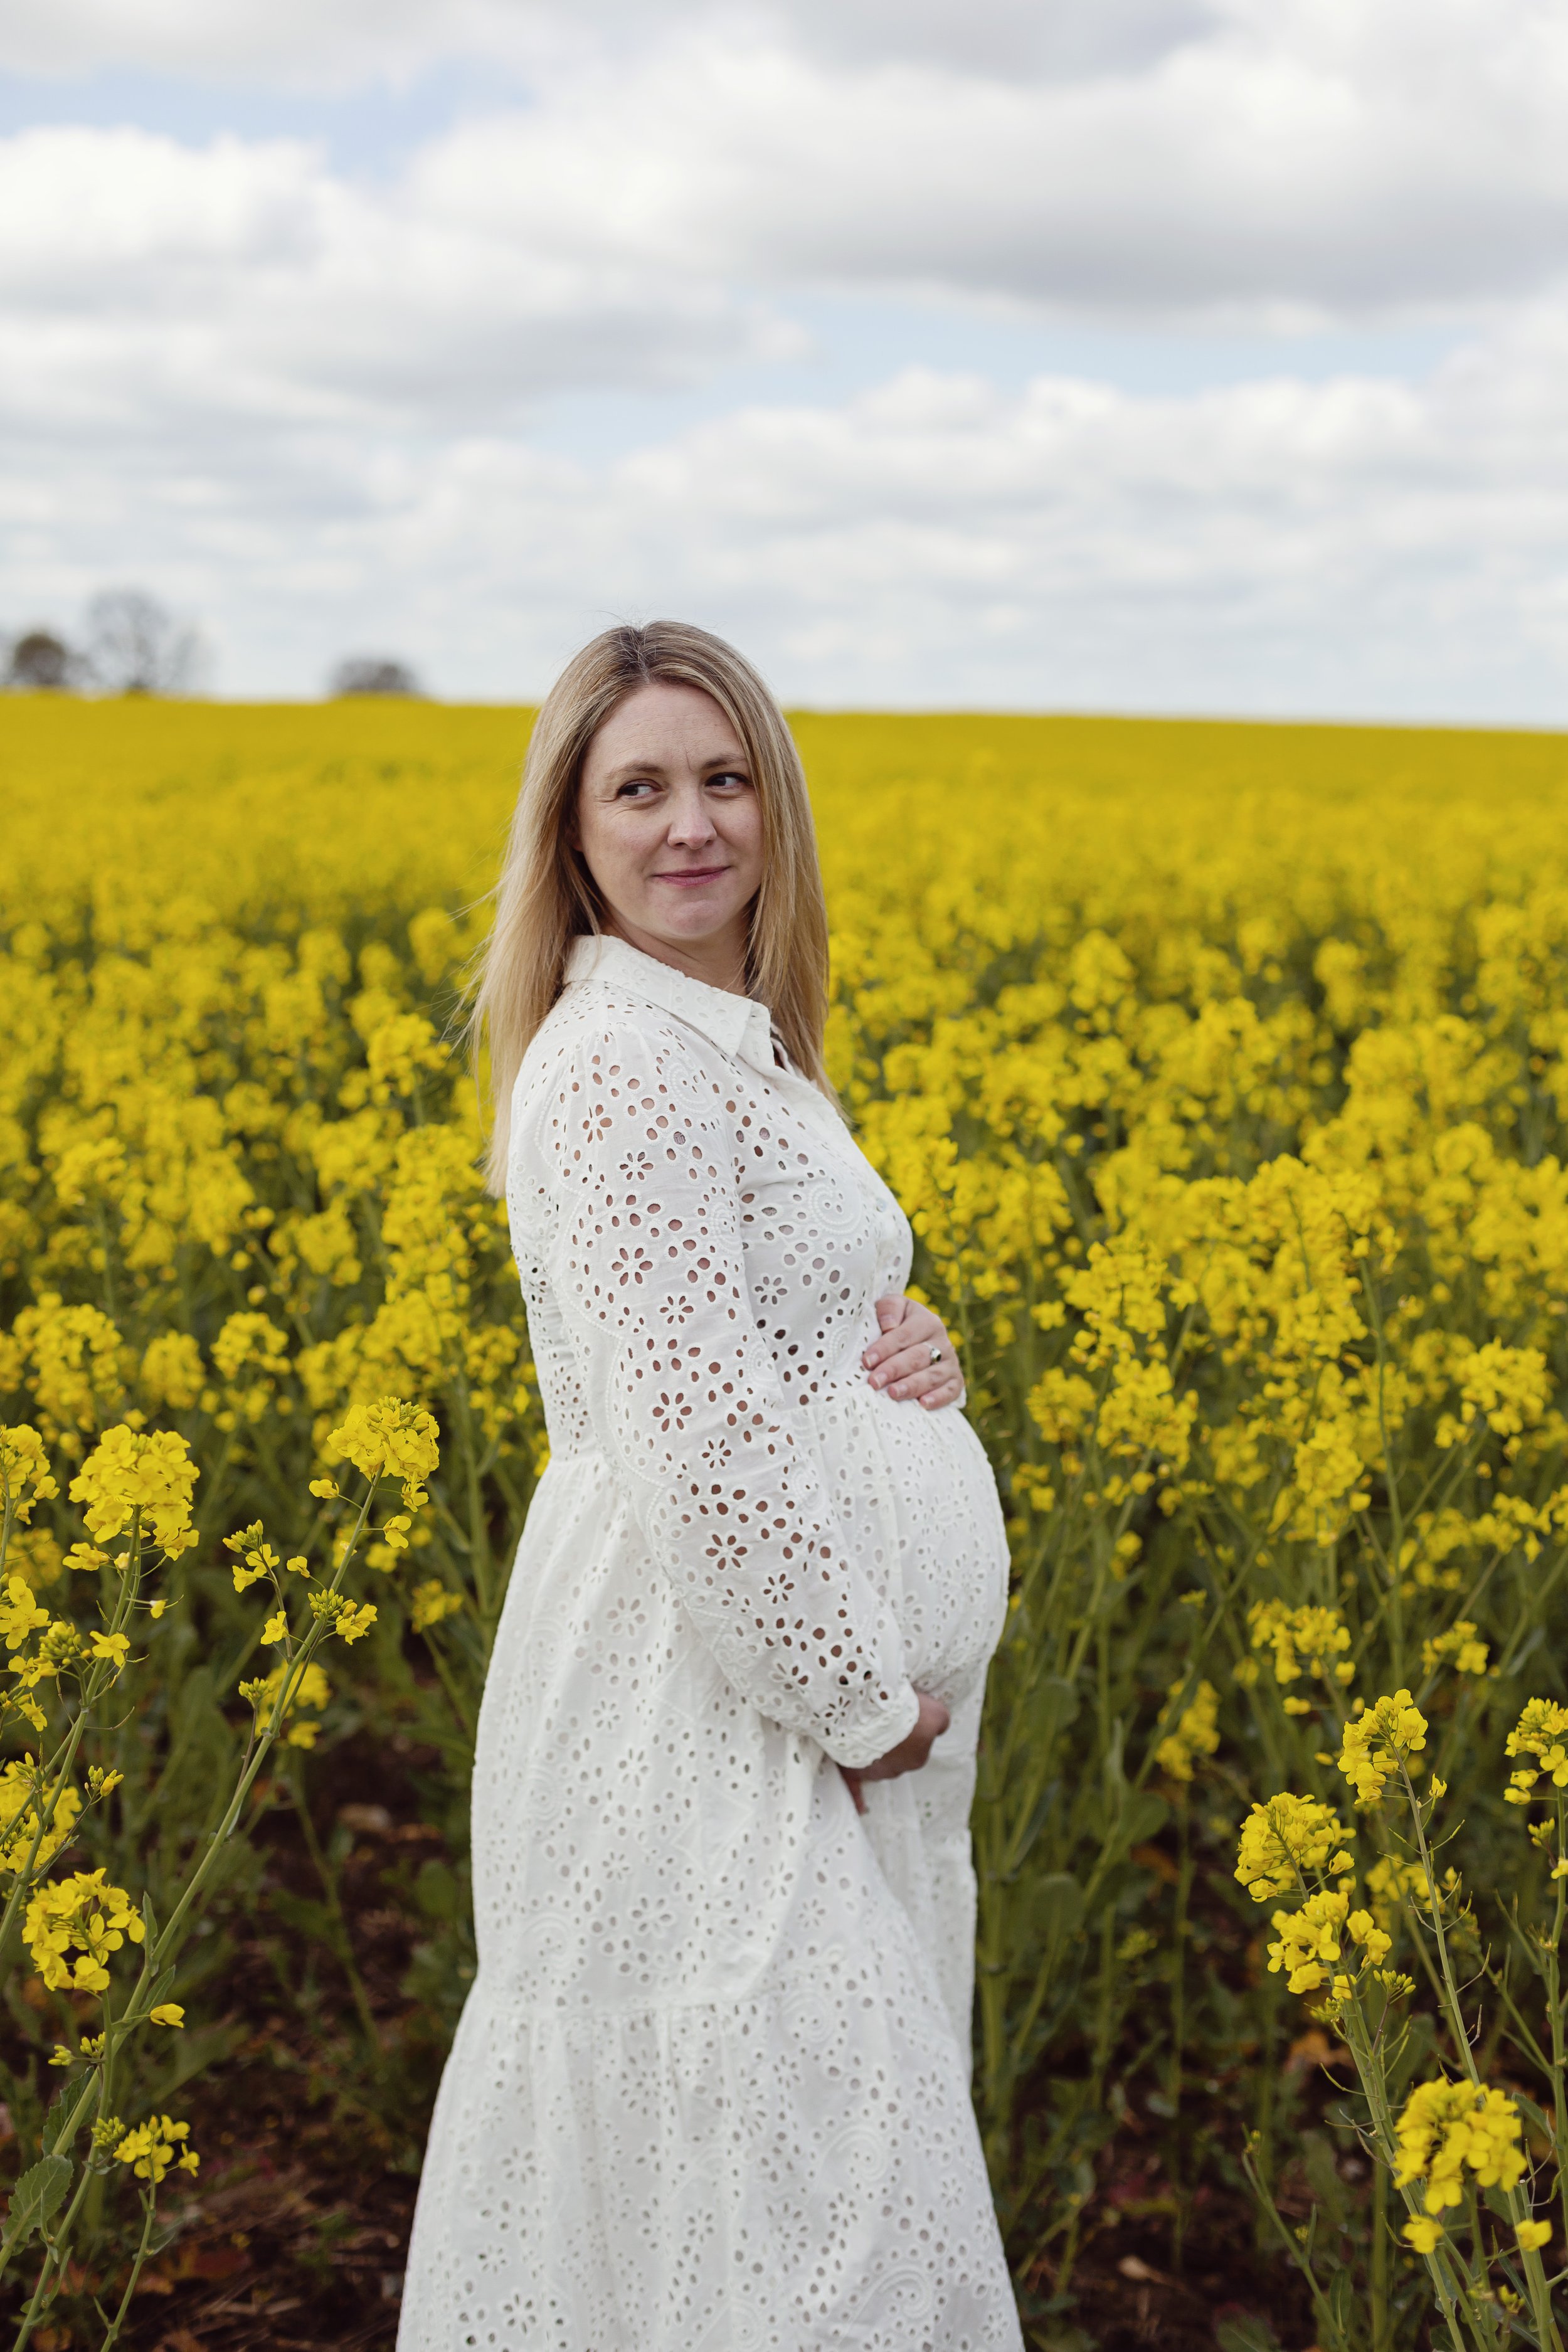 Harpenden-hertfordshire-newborn-maternity-photographer-award-winningbest-maternity-outdoor-photographer-hertfordshire-stalbans-harpenden.jpg